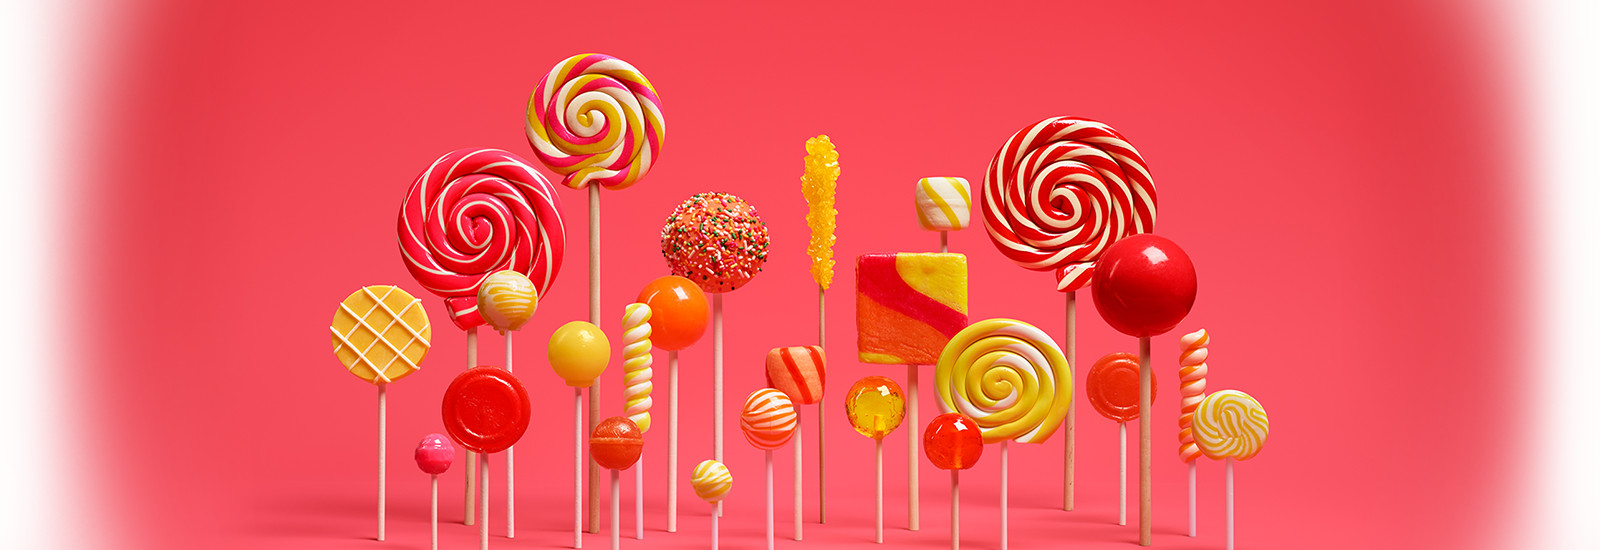 Google Presenta Android Lollipop 5.0